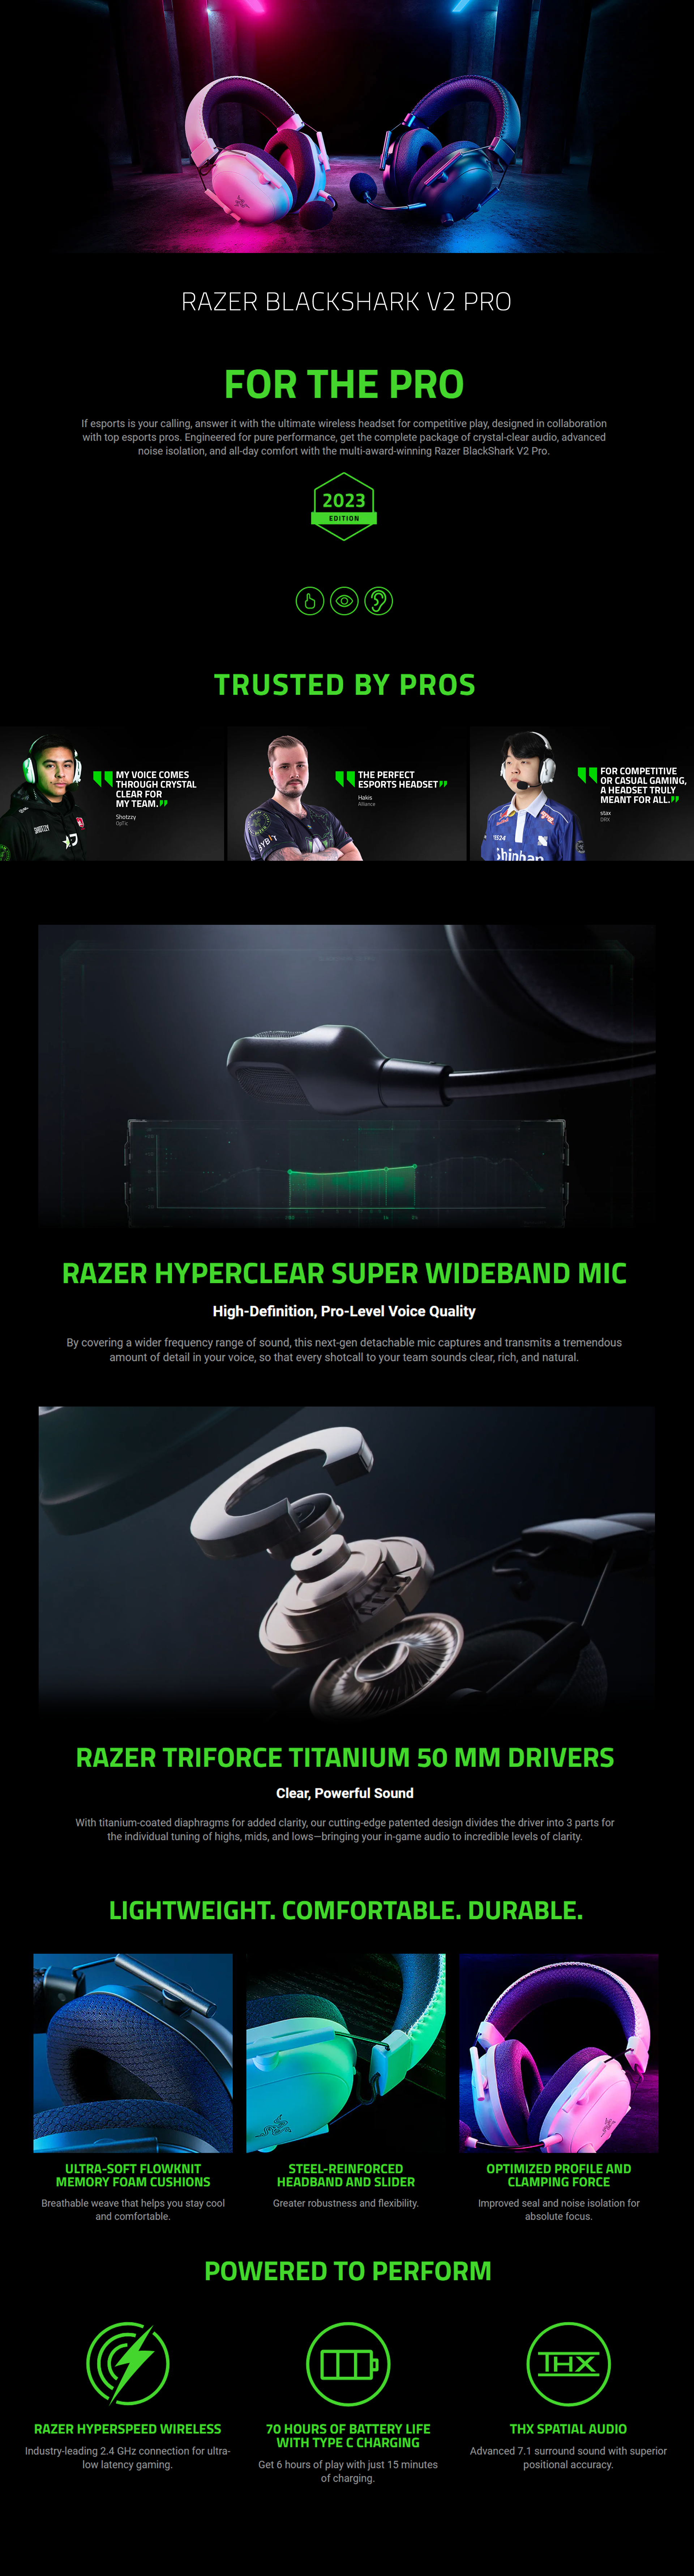 Razer_Blackshark_V2_Pro_Wireless_Headphones